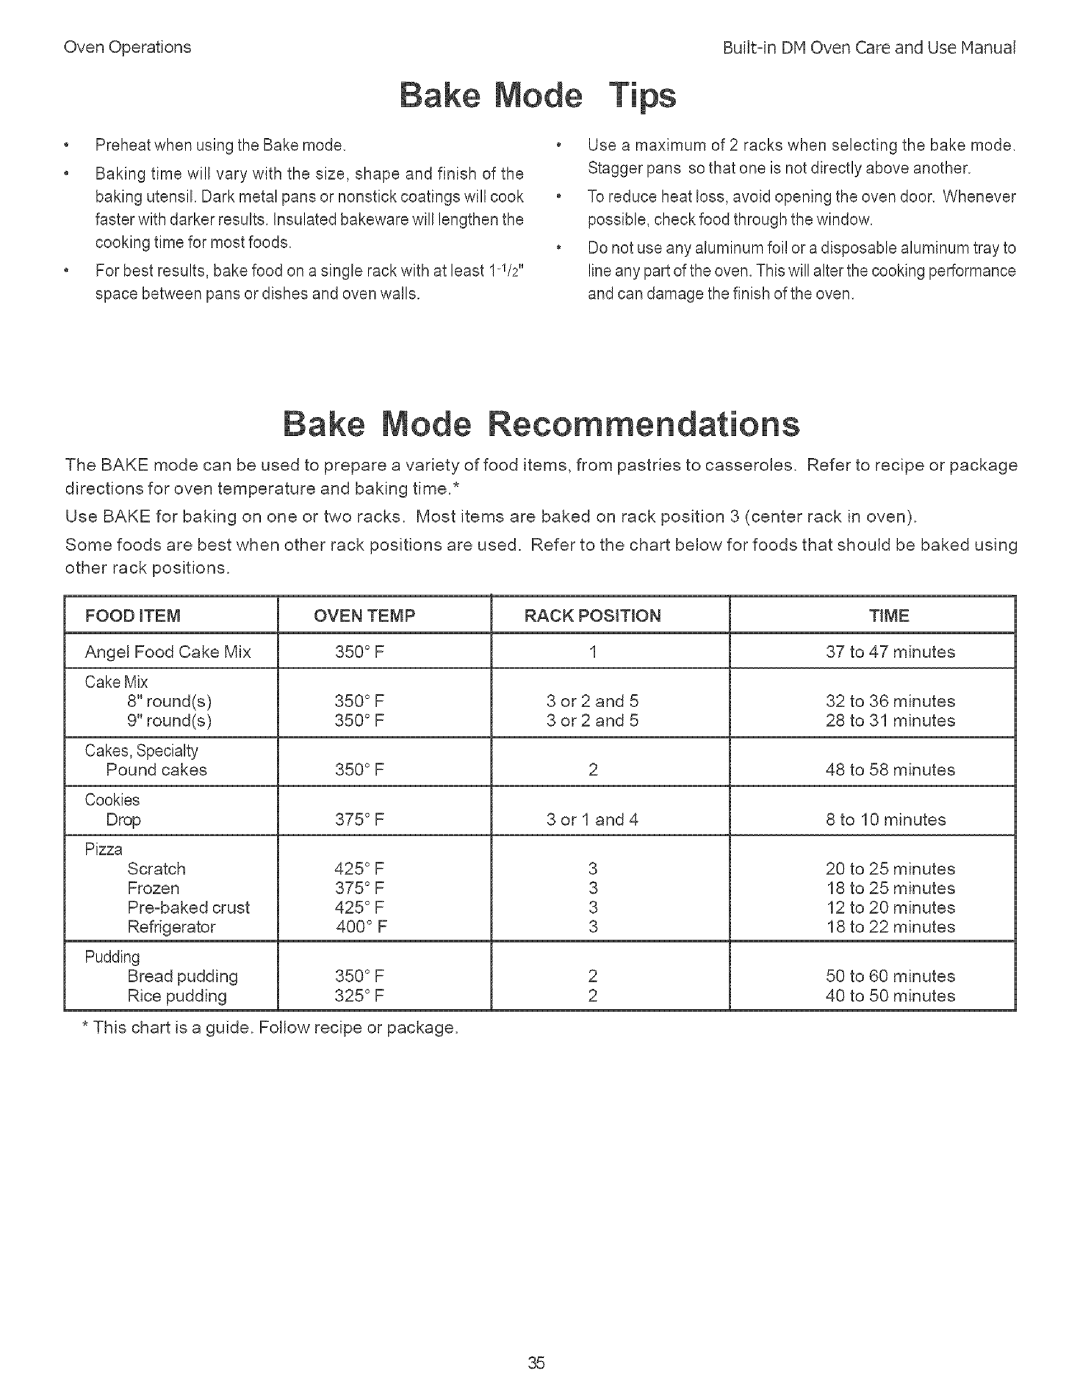 Thermador DM301, DM302 manual Bake Mode Recommendations, OvenOperations, Built-inDMOvenCareandUseManual 